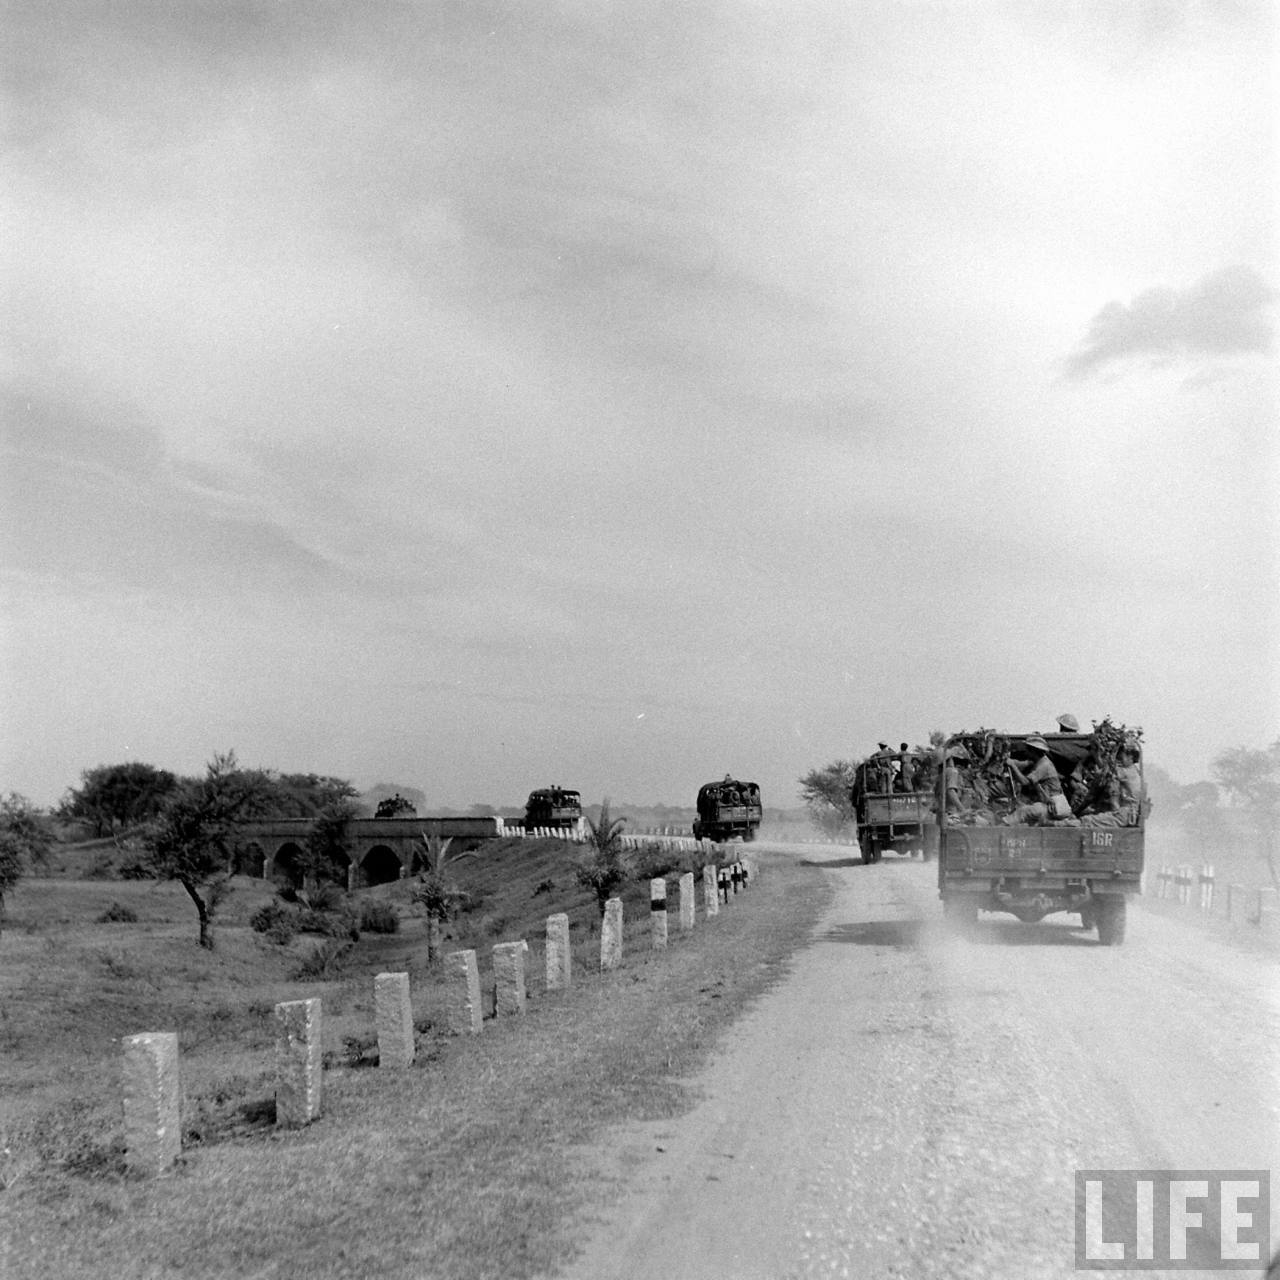 Indian Army Vehicles | Operation Polo | Hyderabad Police Action | Annexation of Hyderabad, Hyderabad (Deccan), Telangana, India | Rare & Old Vintage Photos of Operation Polo, Hyderabad (Deccan), Telangana, India (1948)